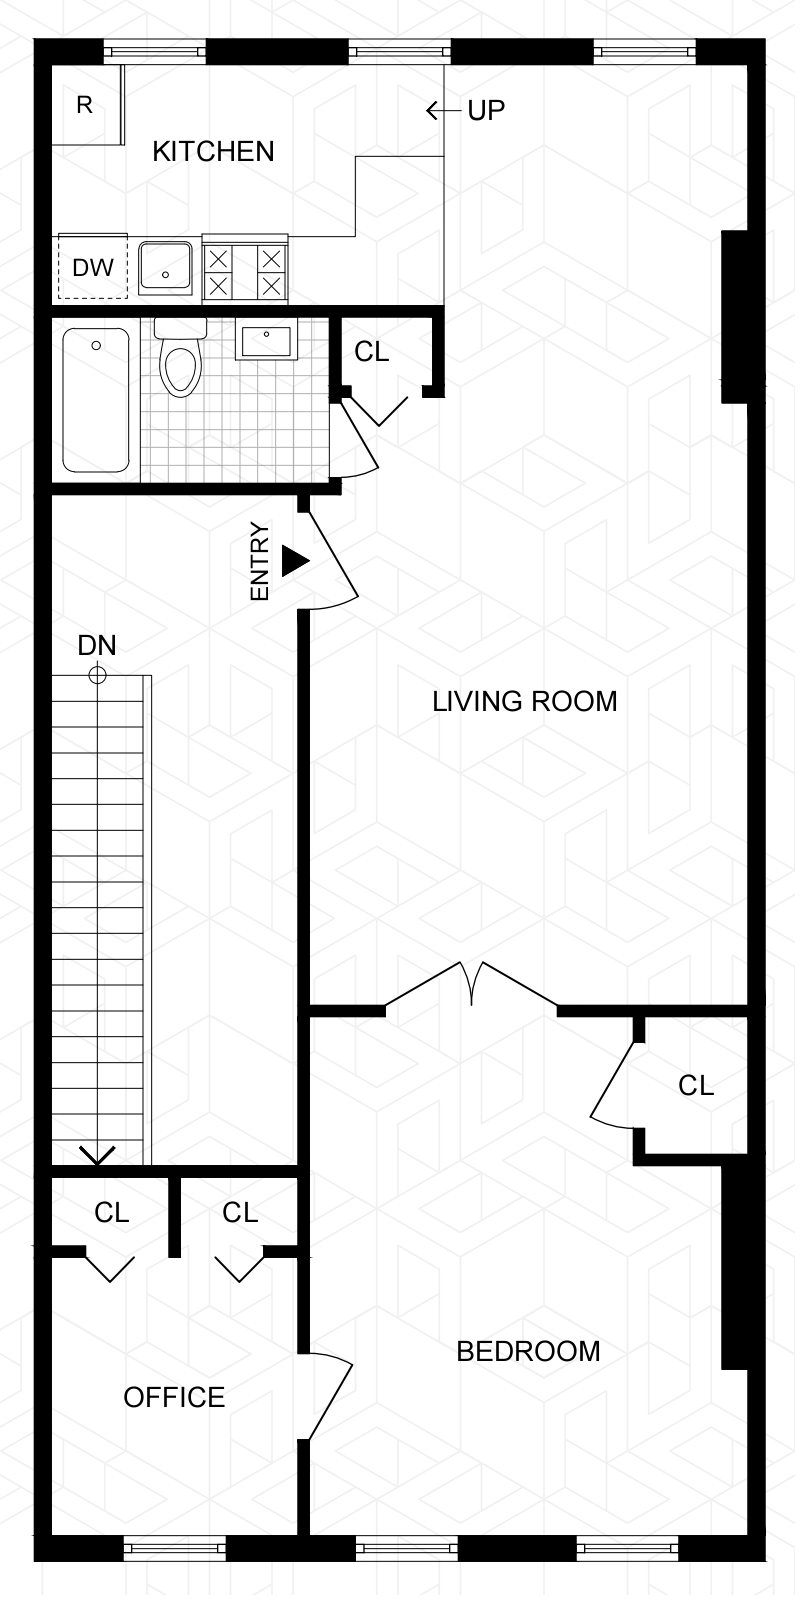 Floorplan for 260 Carroll Street, 3